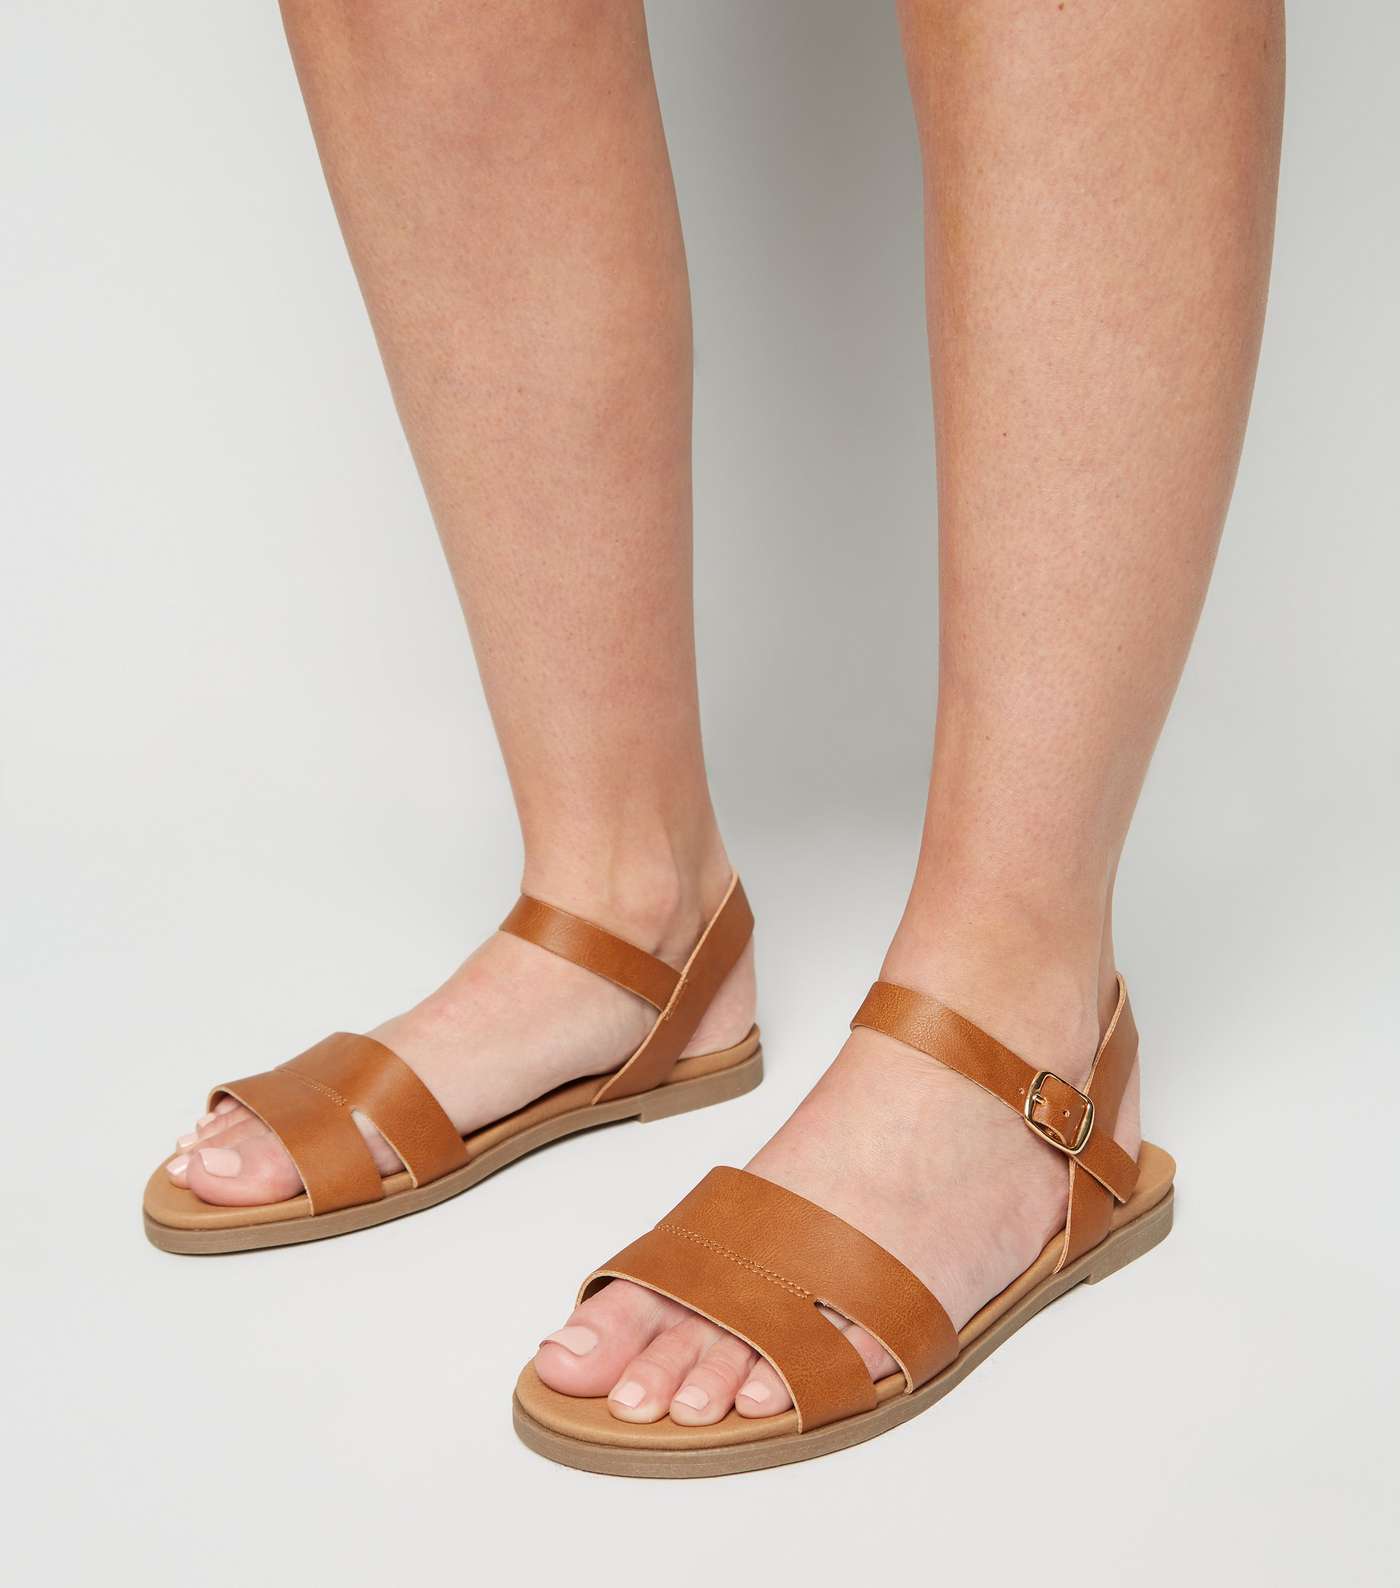 Wide Fit Tan 2 Part Footbed Sandals Image 2